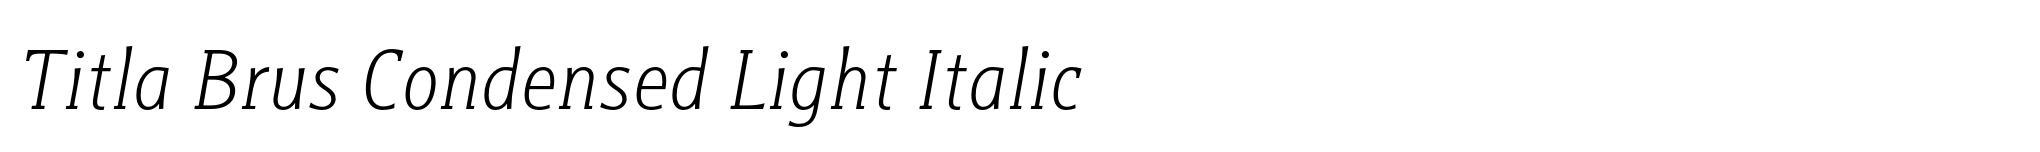 Titla Brus Condensed Light Italic image